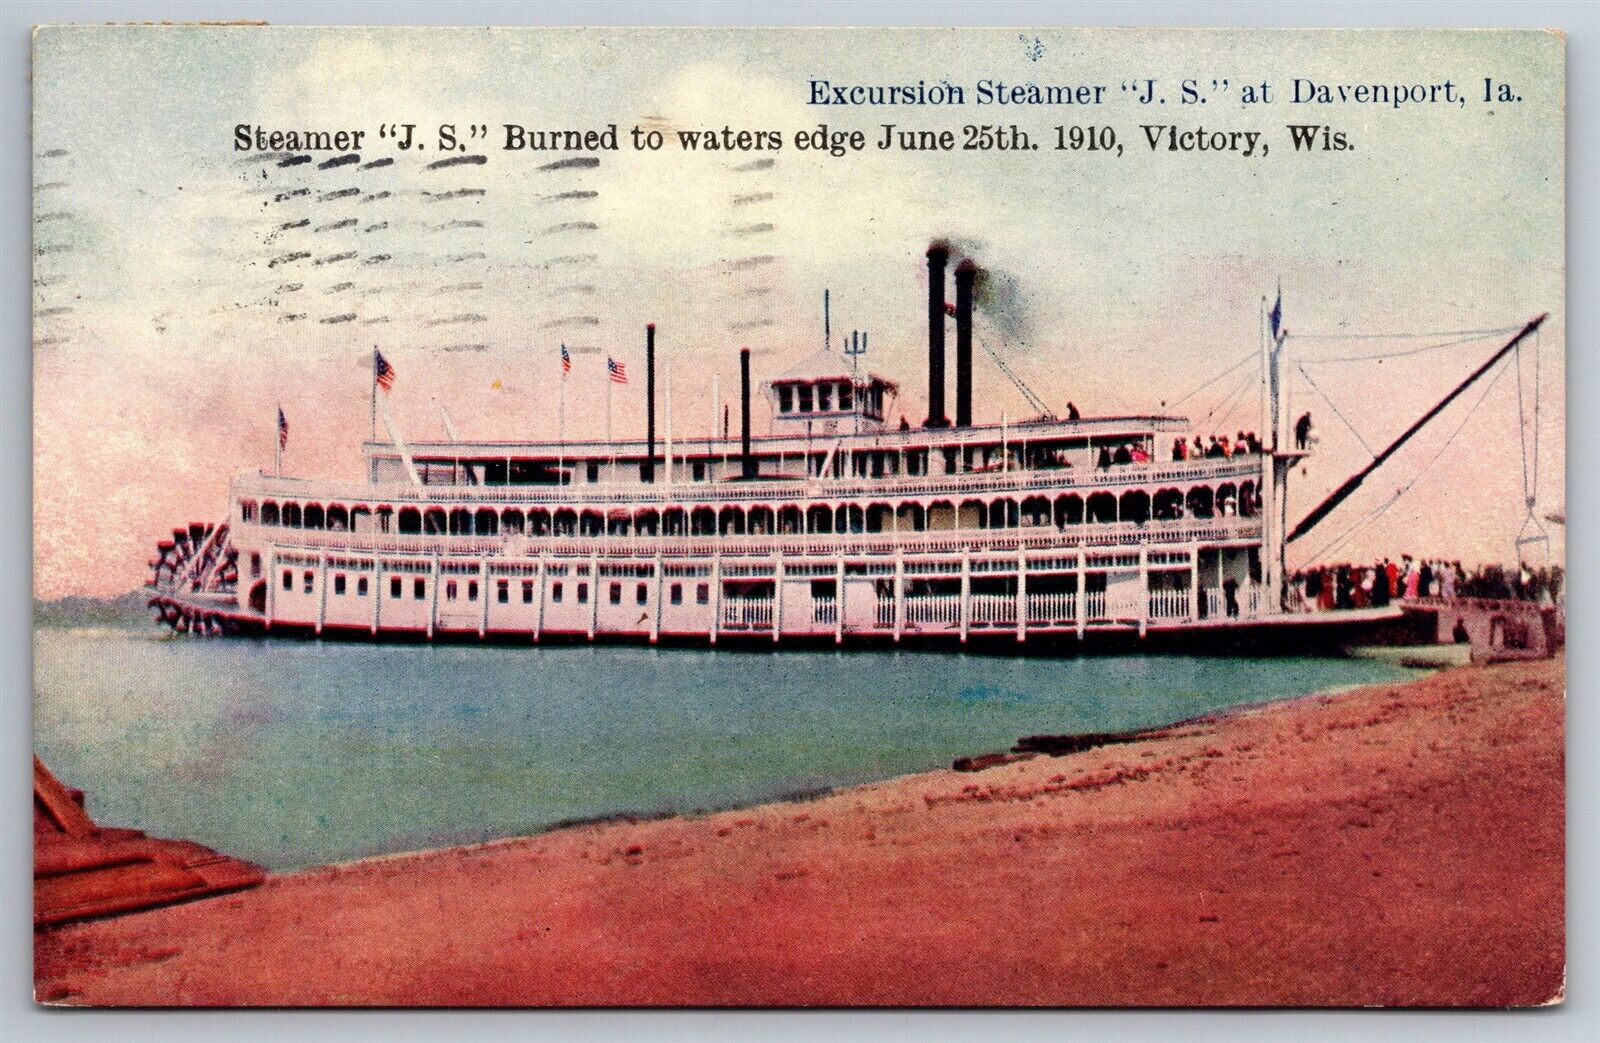 Excursion Steamer JS Davenport IA Burned 1910 in Victory WI C1907 Postcard H3